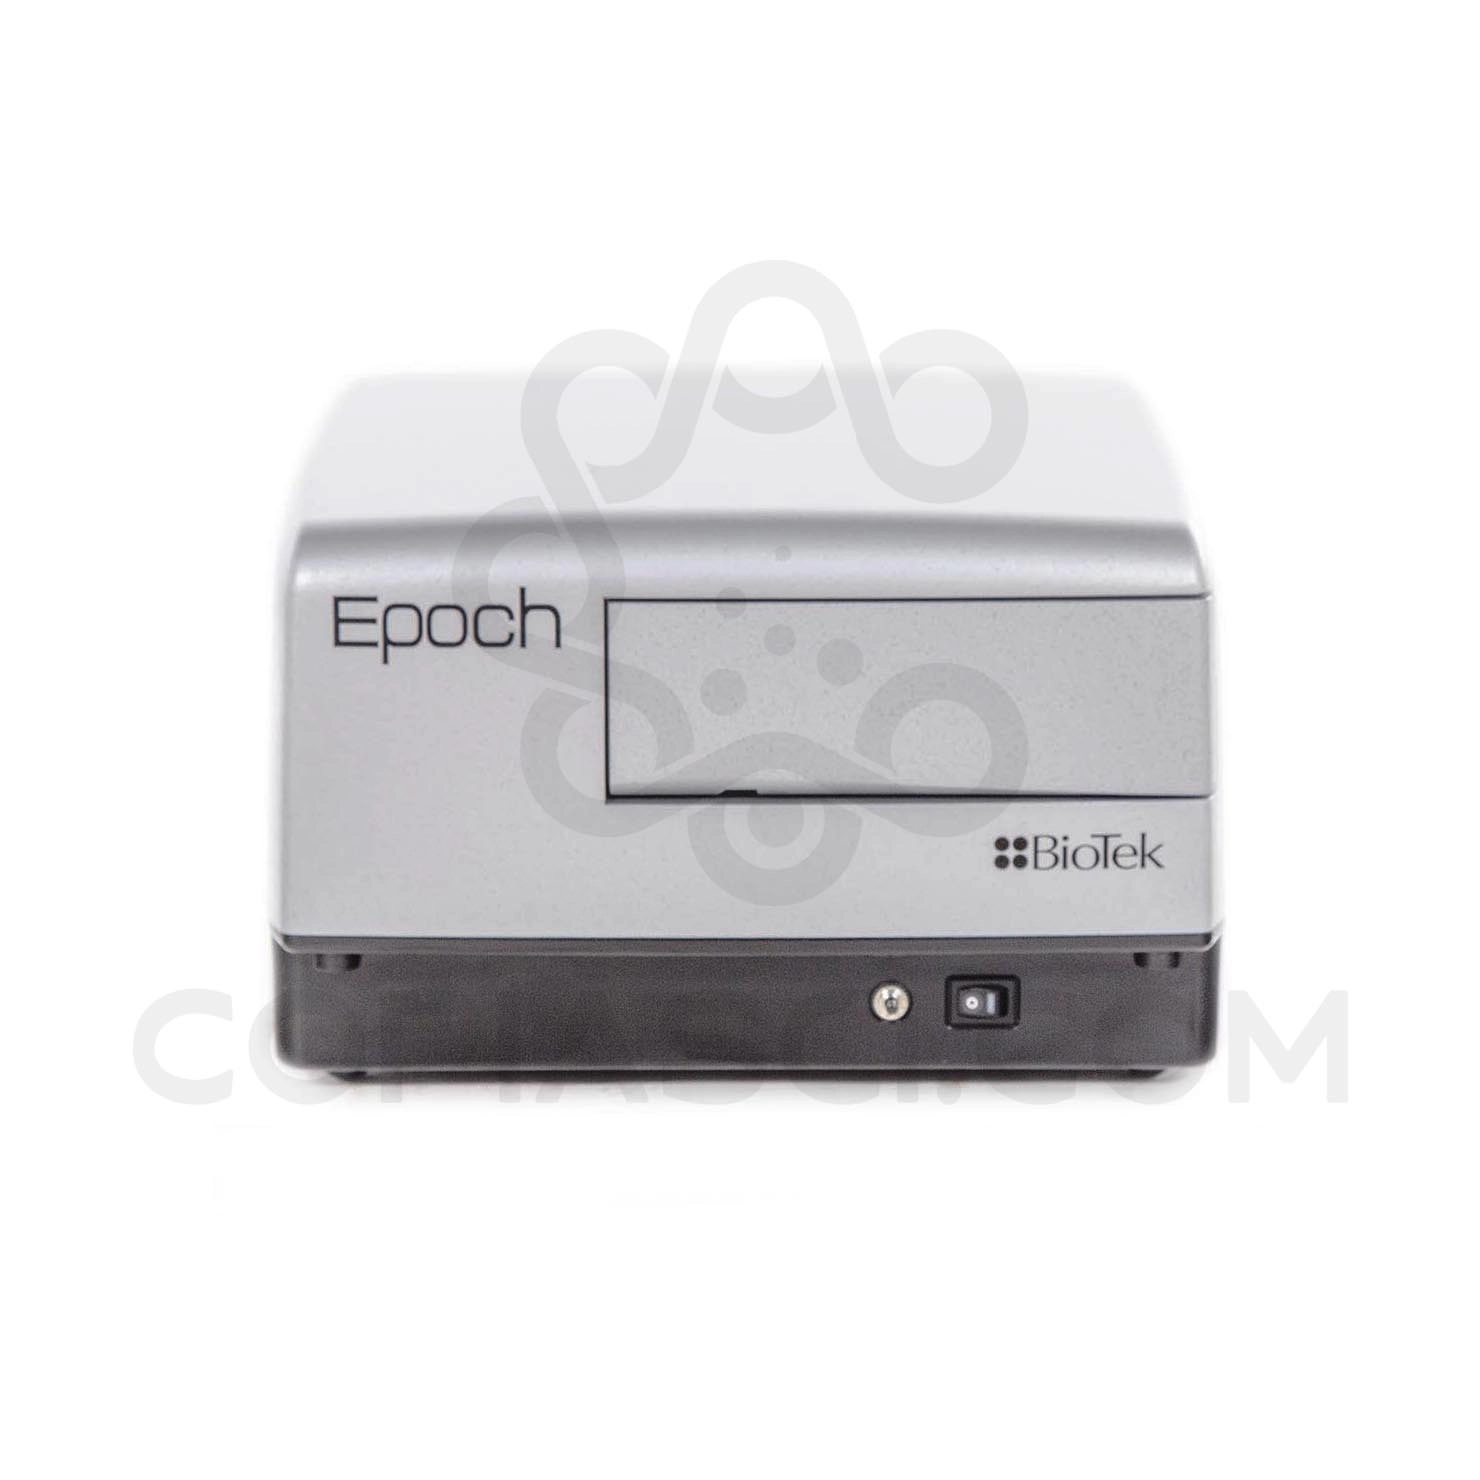 Agilent Technologies Epoch Microplate Reader